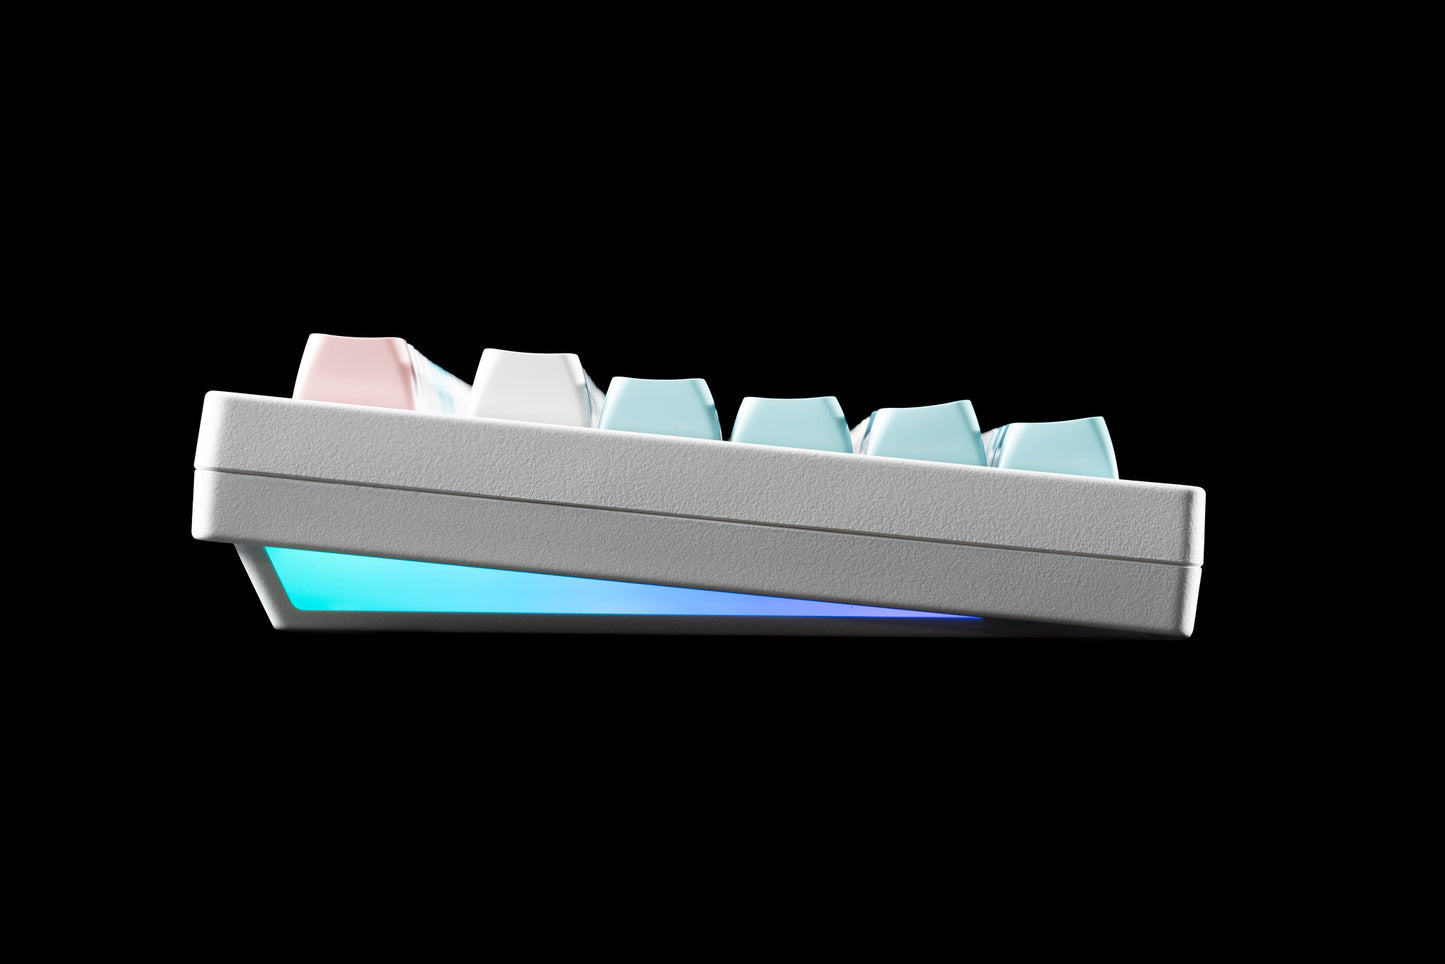 [PRE-ORDER] VELOCIFIRE RX870 WIRELESS 2.4G RGB MECHANICAL KEYBOARD